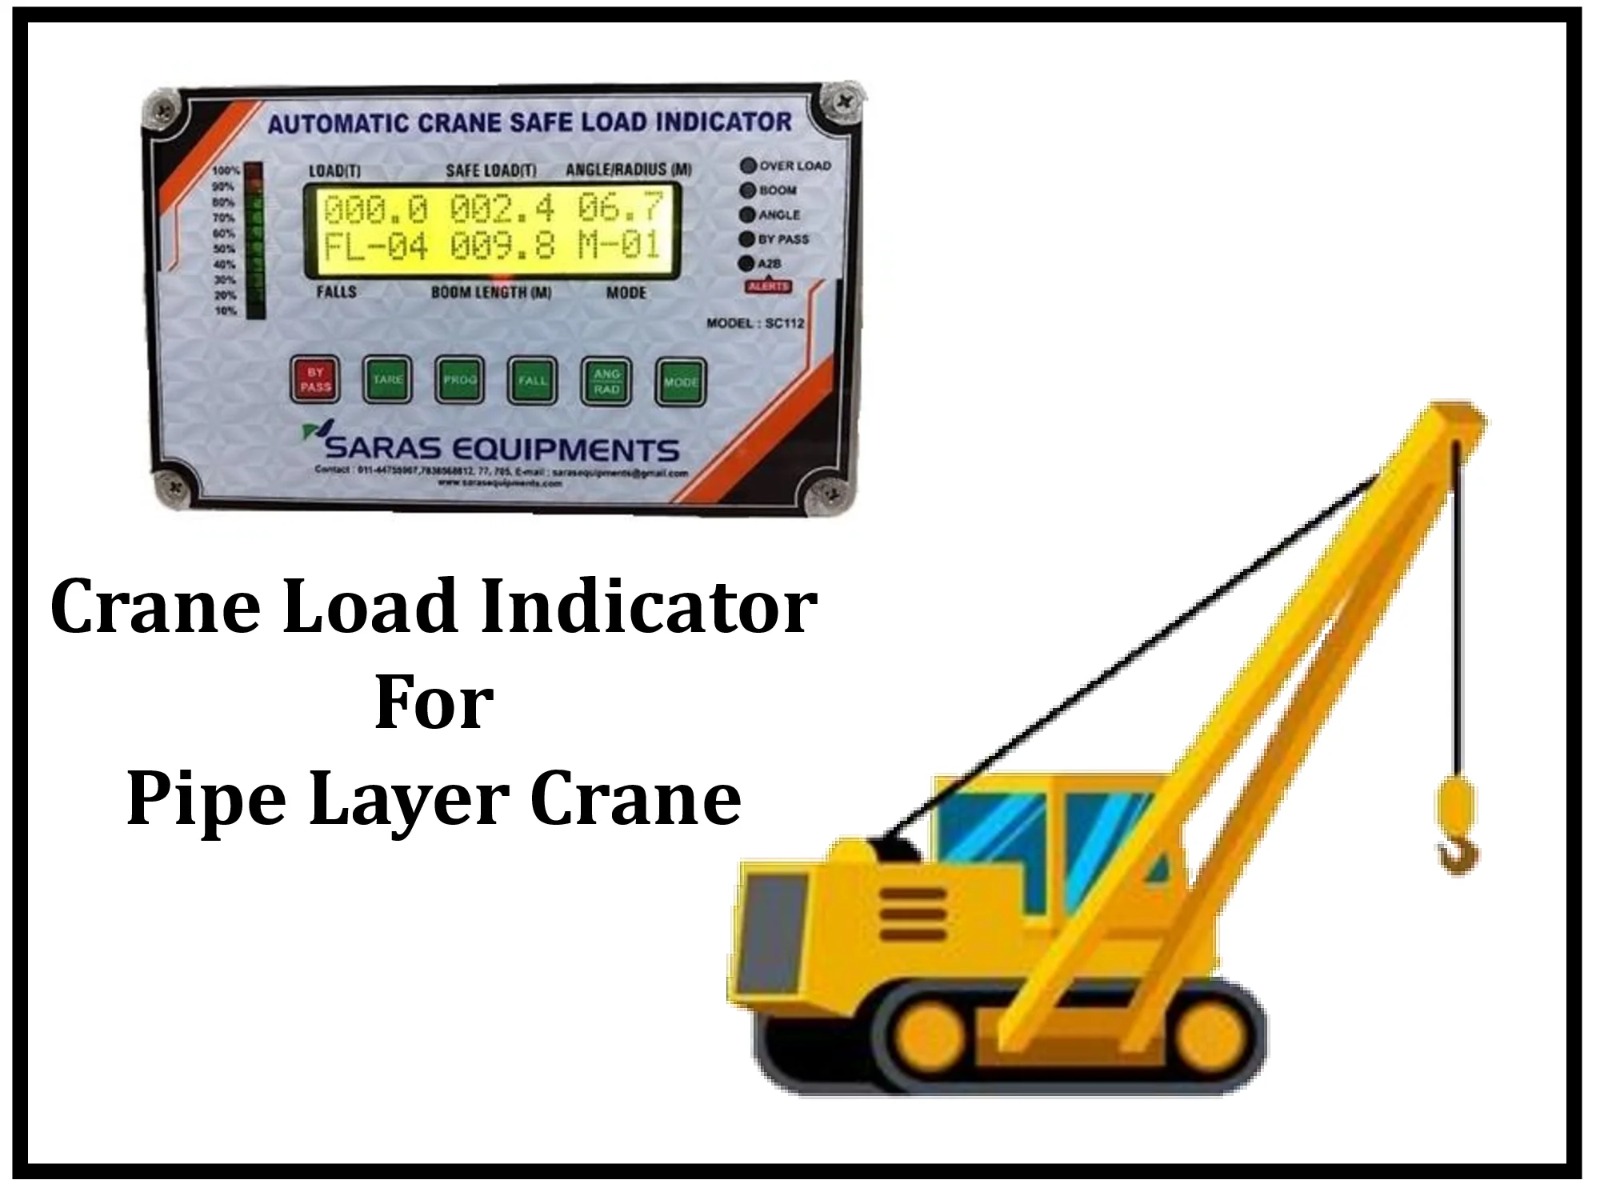 Crane Safe Load Indicator for Pipe Layer Crane